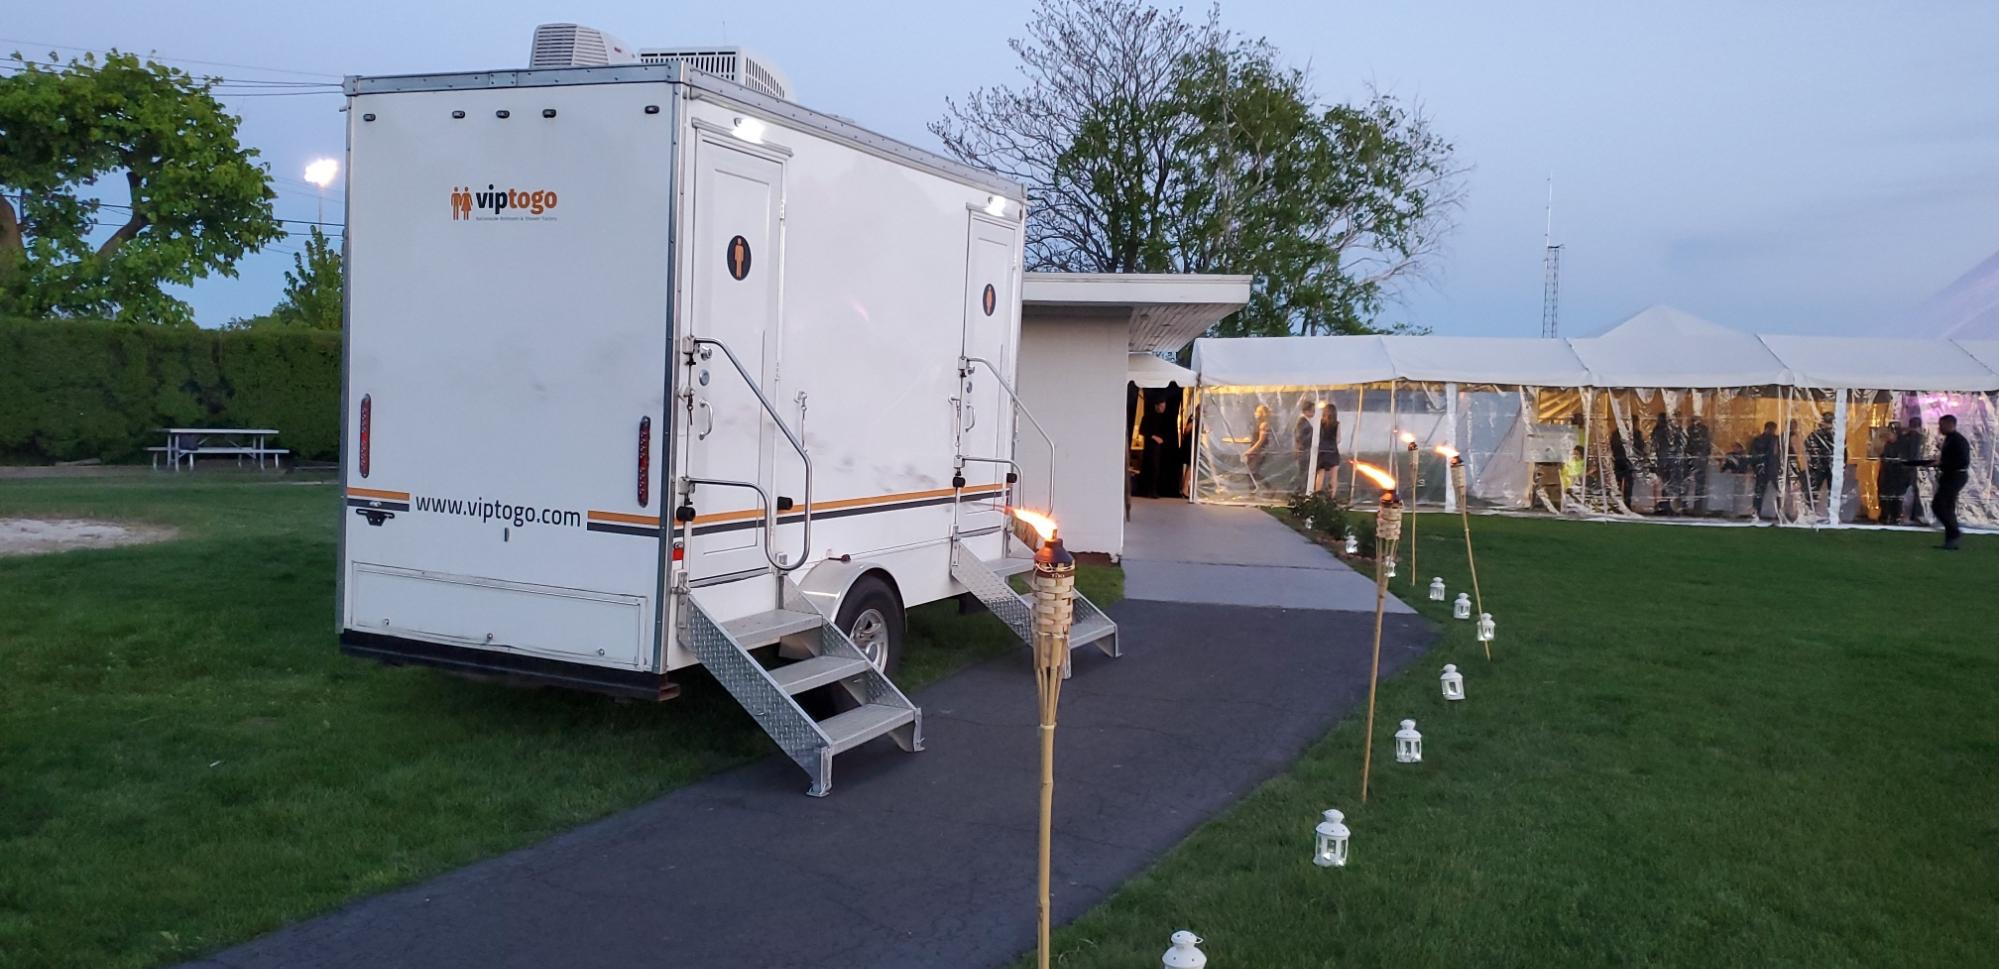 luxury restroom trailers for indoor and outdoor events